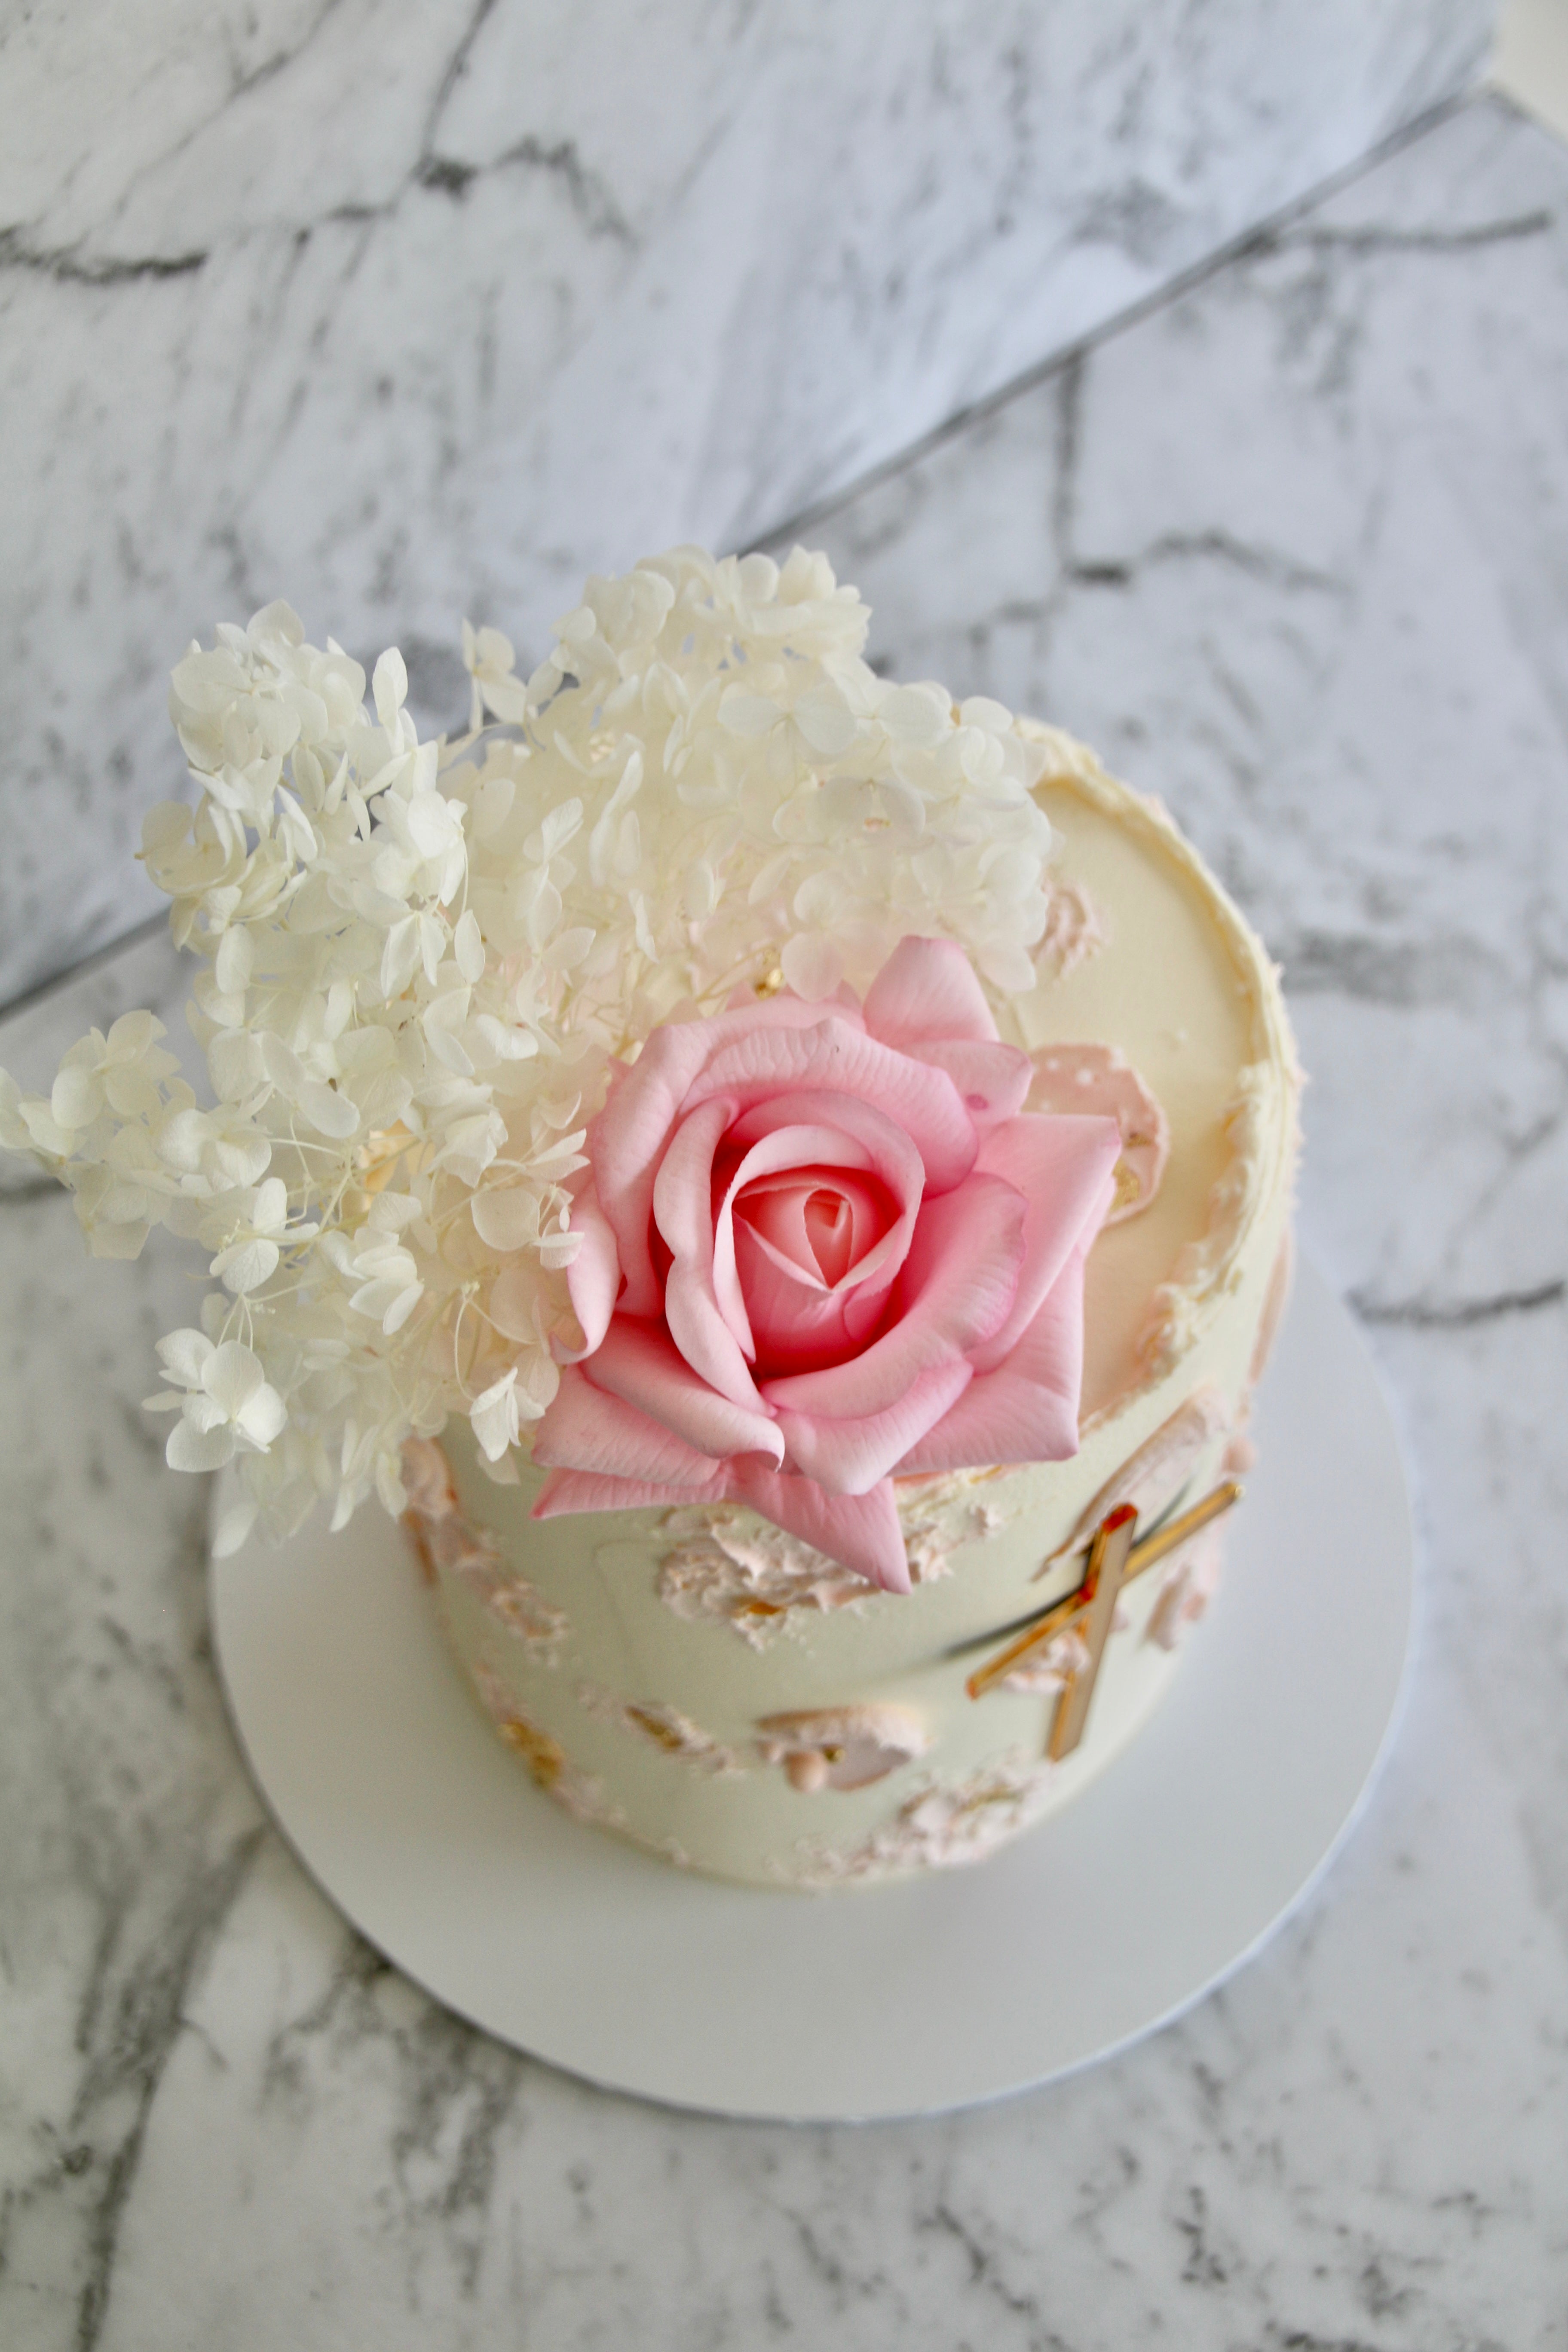 Karens Cakes | Occasion & Wedding Cakes Dublin 15